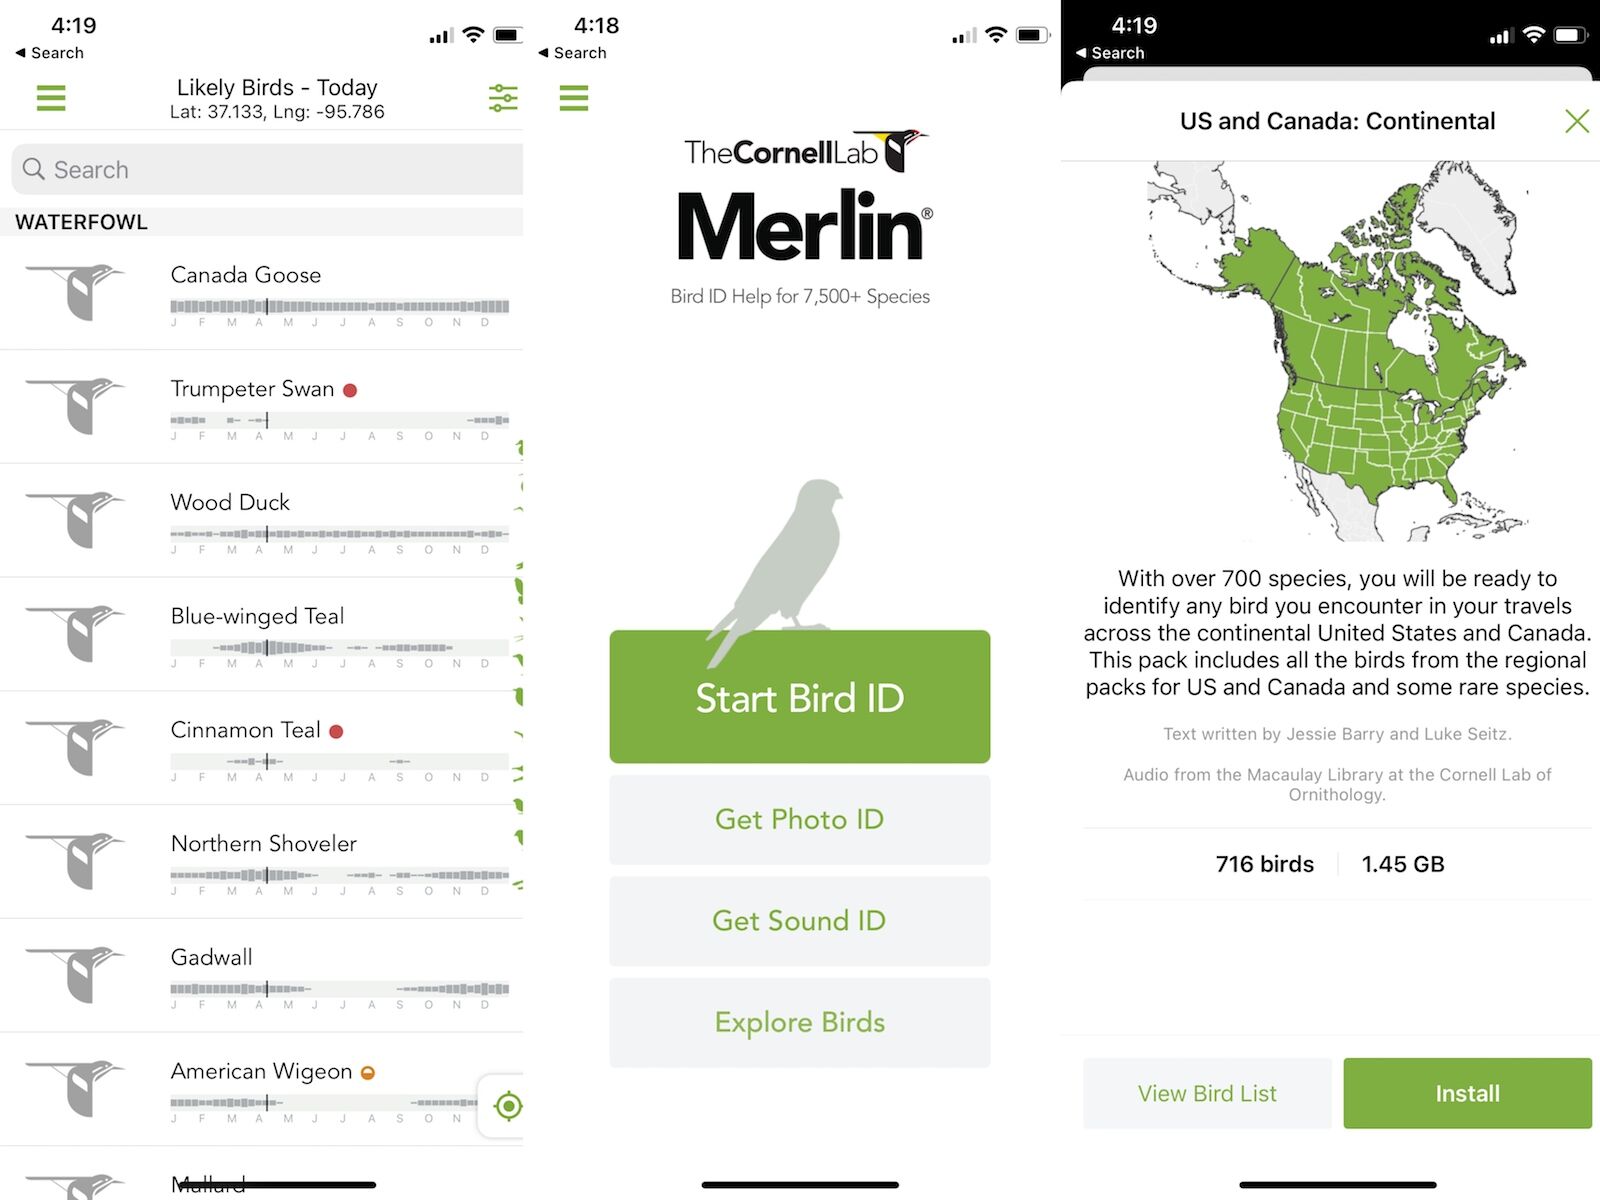 smart phone bird apps and citizen science - merlin bird id